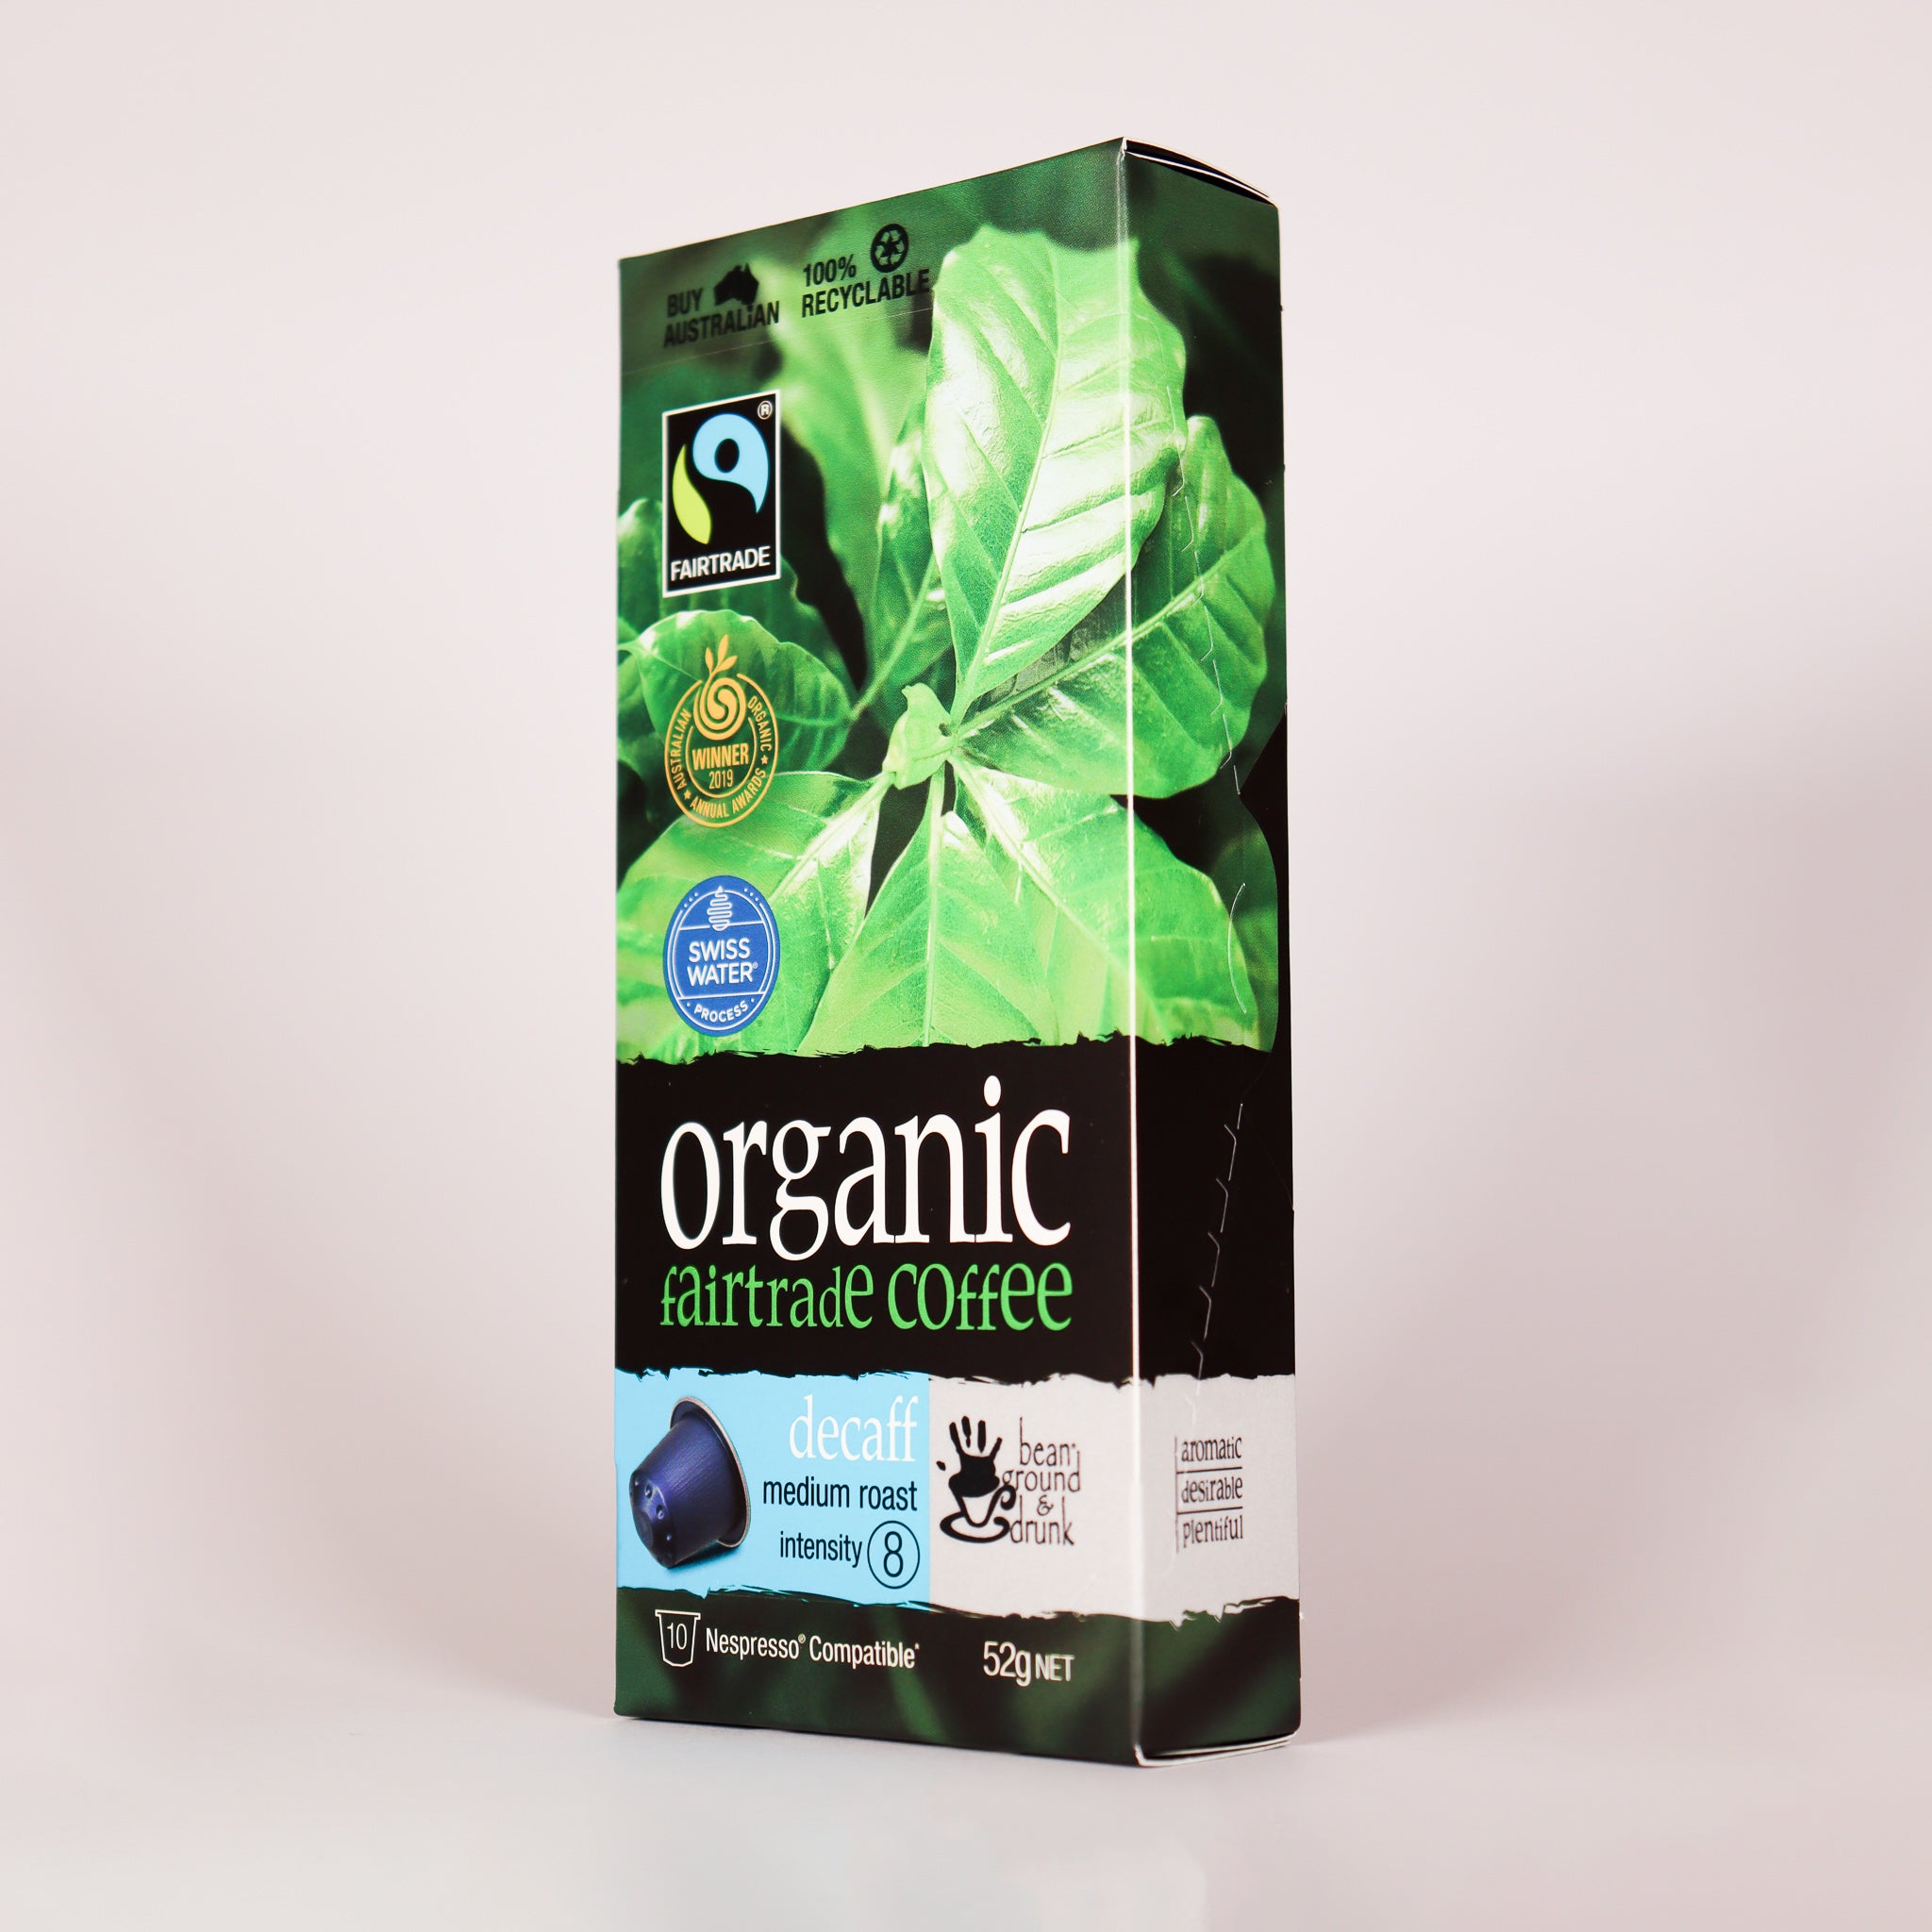 bean ground & drunk Decaff Organic Fairtrade Coffee  aluminium Capsules 10pk